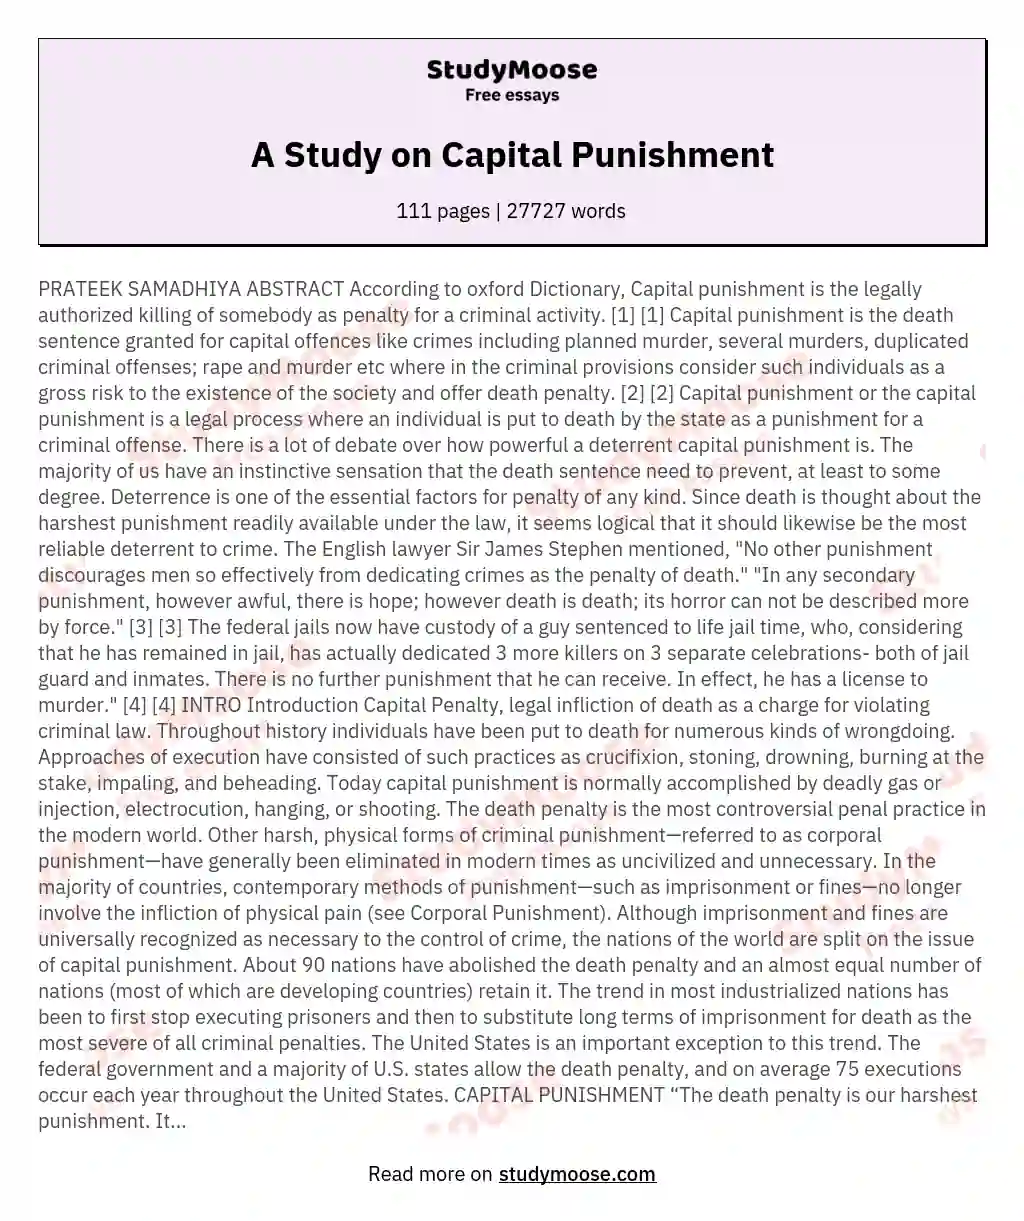 A Study on Capital Punishment